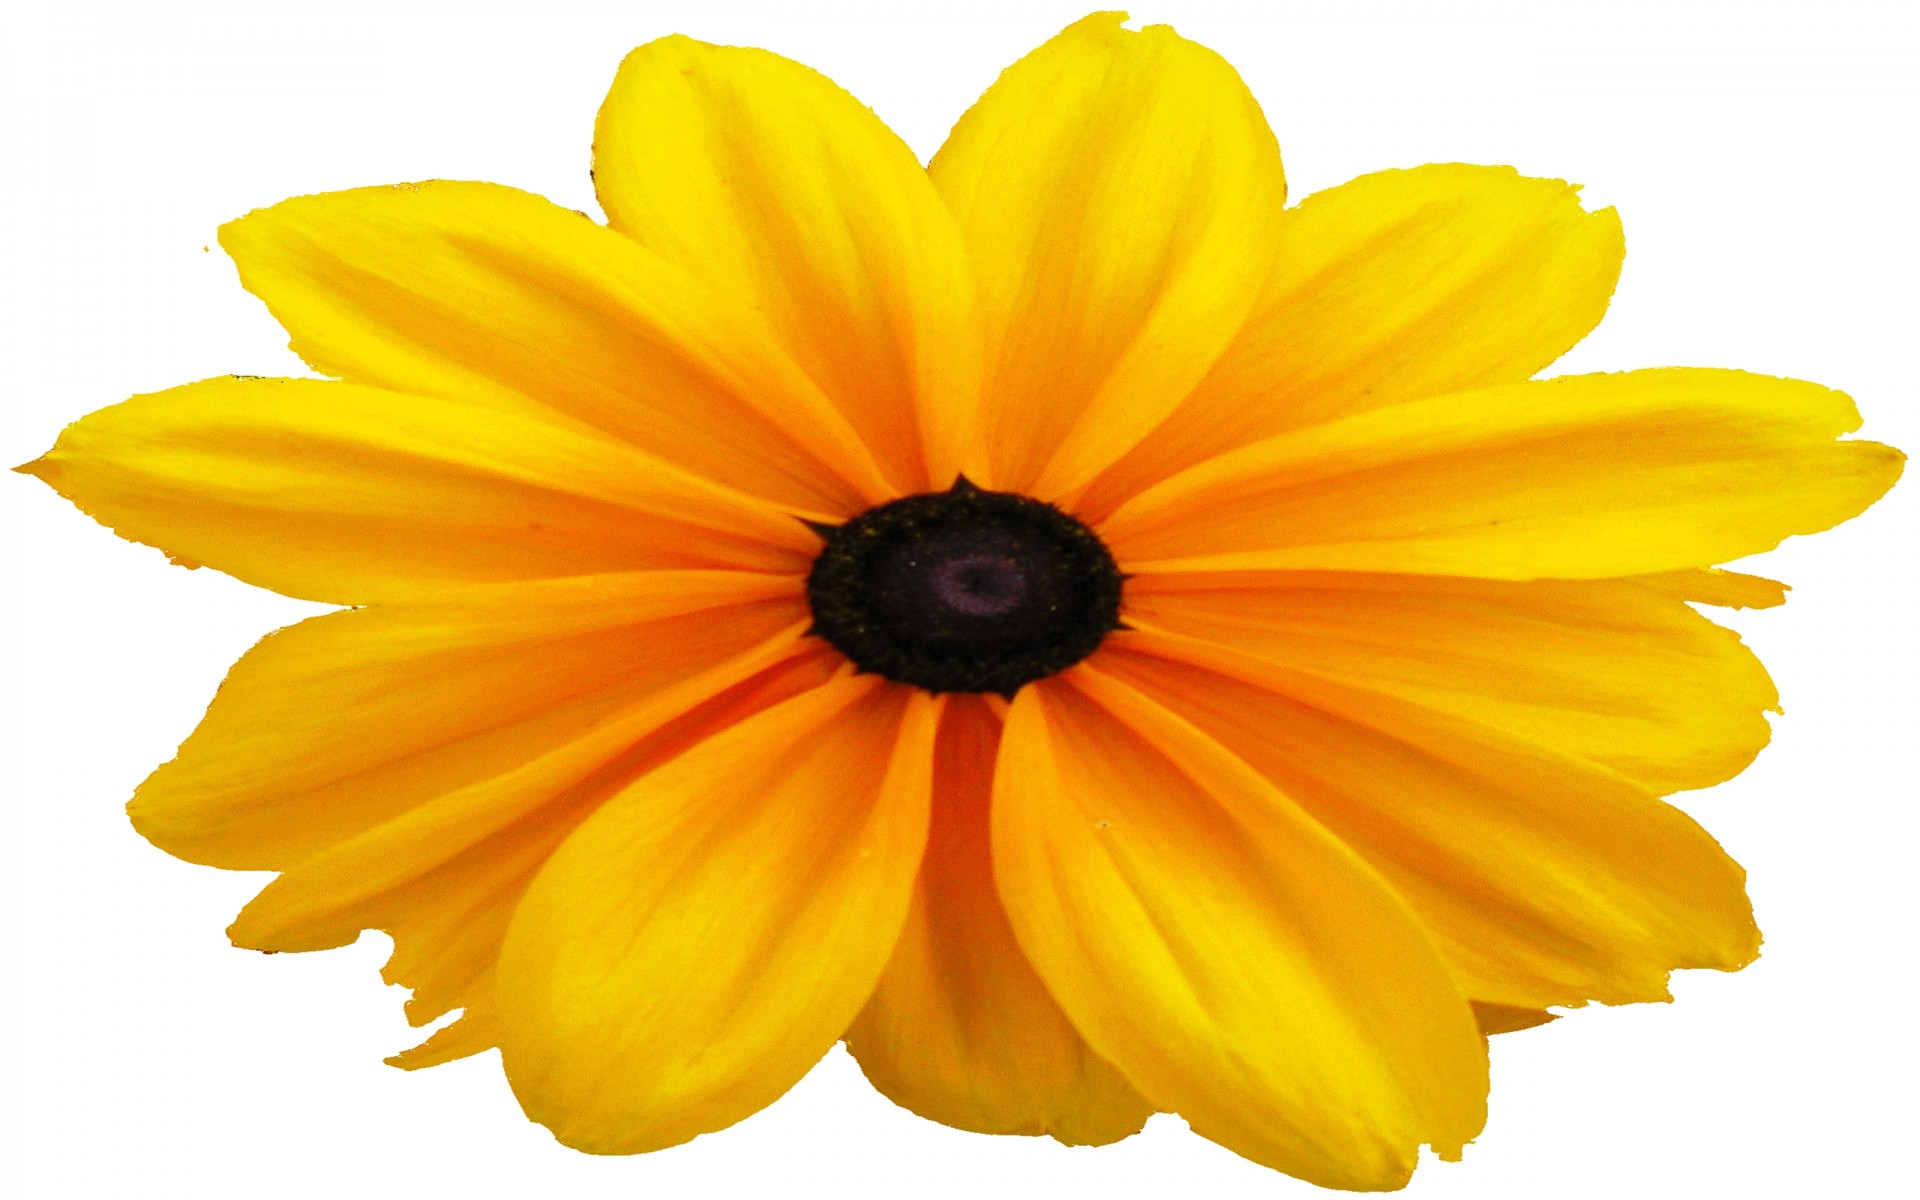 earth, black eyed susan, close up, flower, rudbeckia, yellow flower, flowers